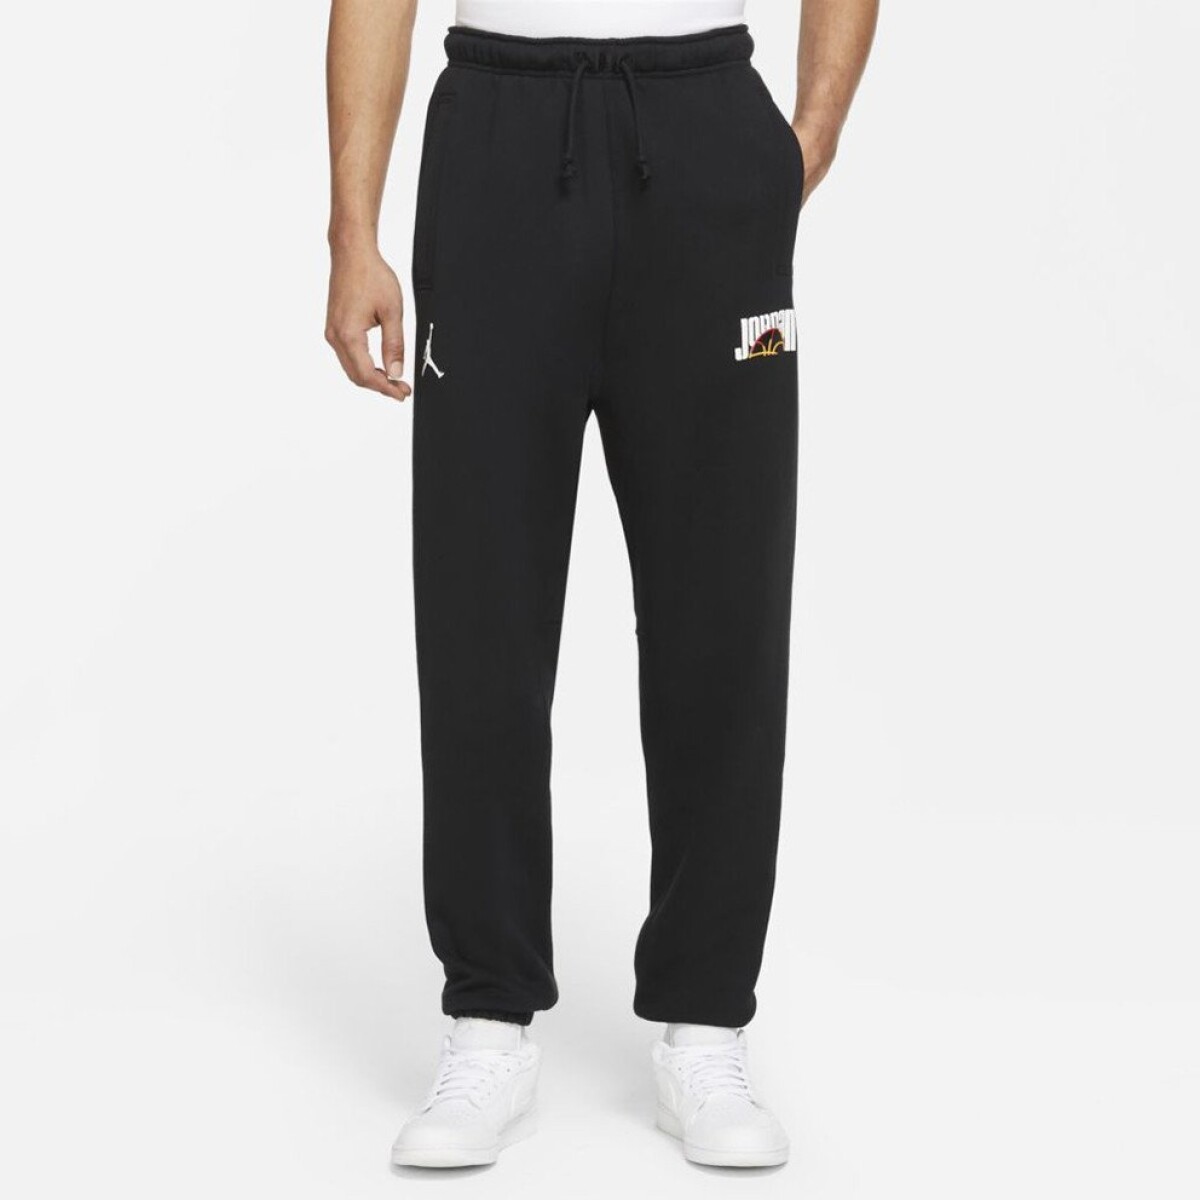 Pantalon Nike Moda Hombre Jordan Sprt - Color Único 